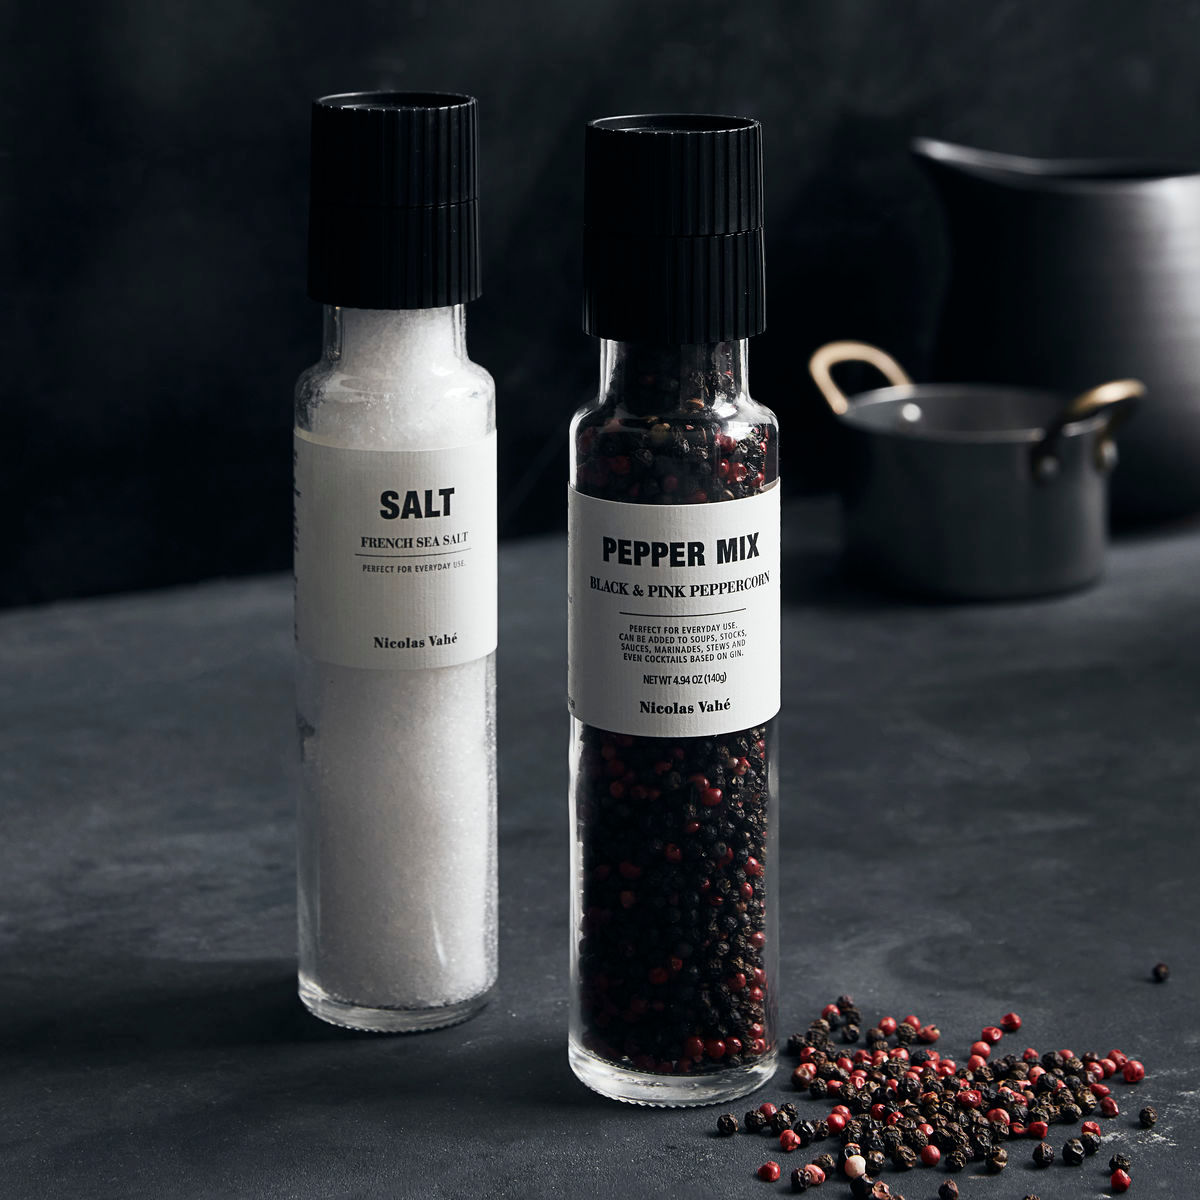 Nicolas Vahe Gift box, Nicolas Vahé Everyday essentials – salt & pepper